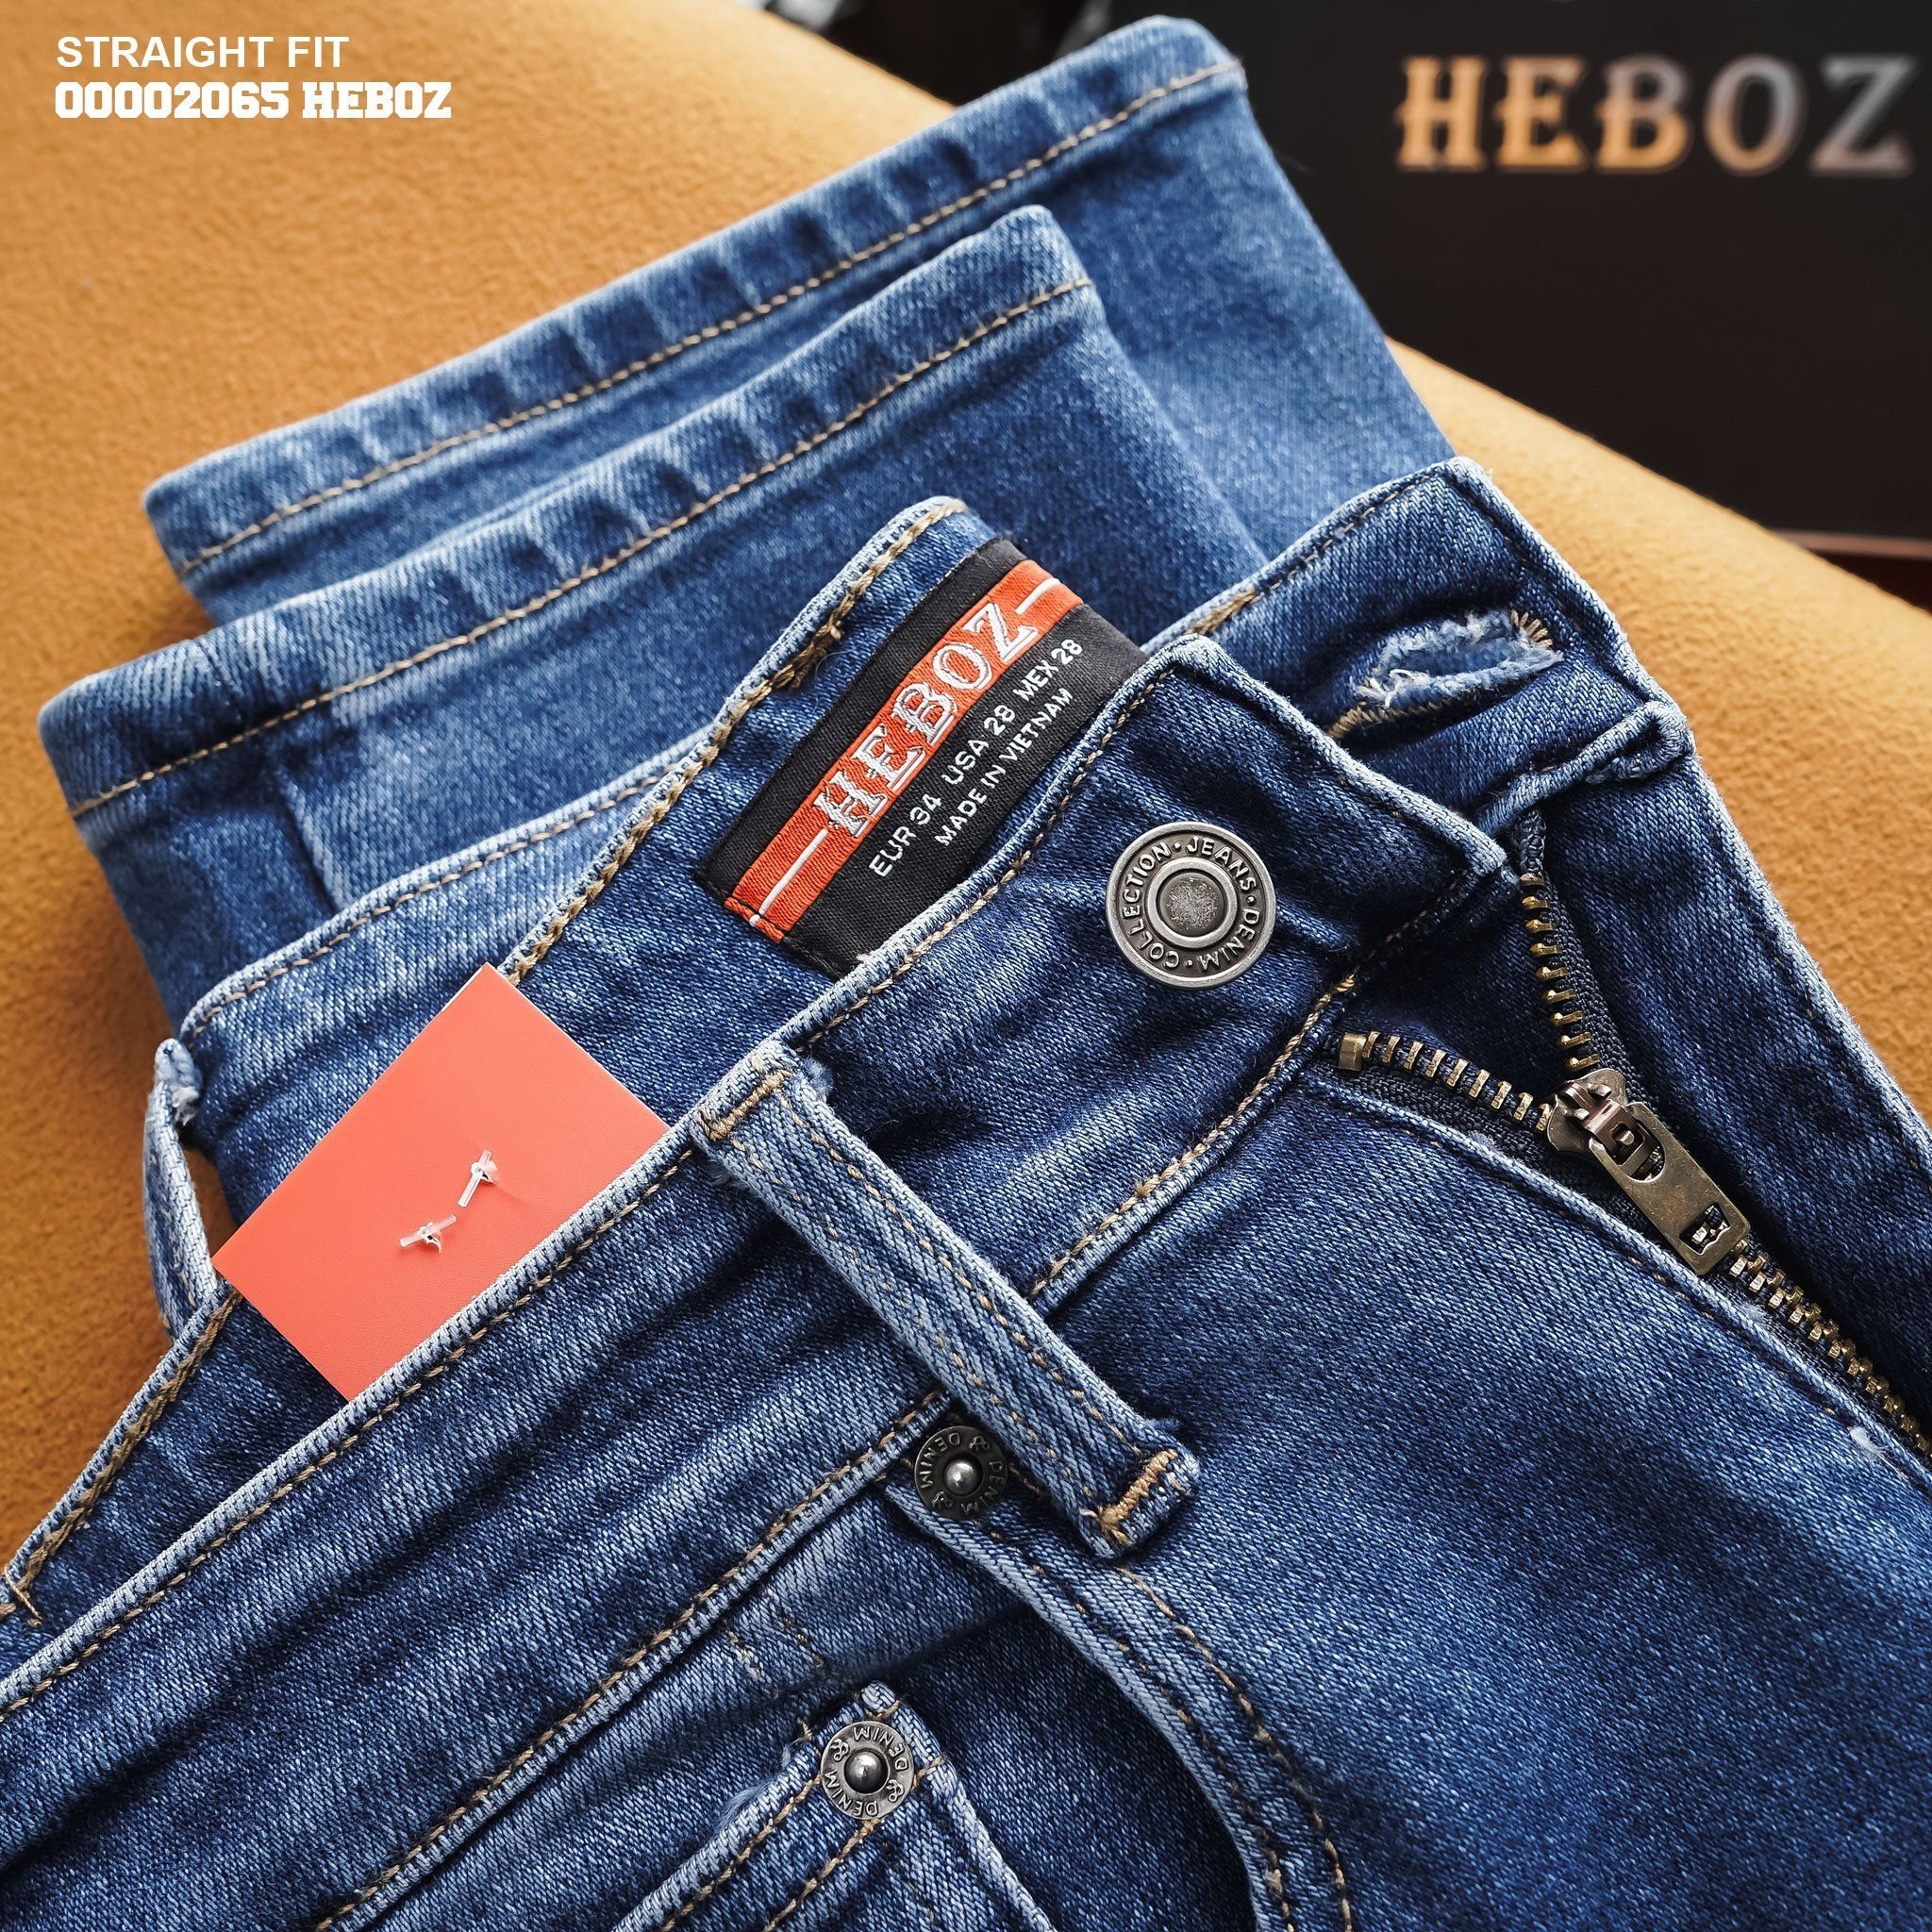  Quần jean straight fit Heboz 003 - 00002065 